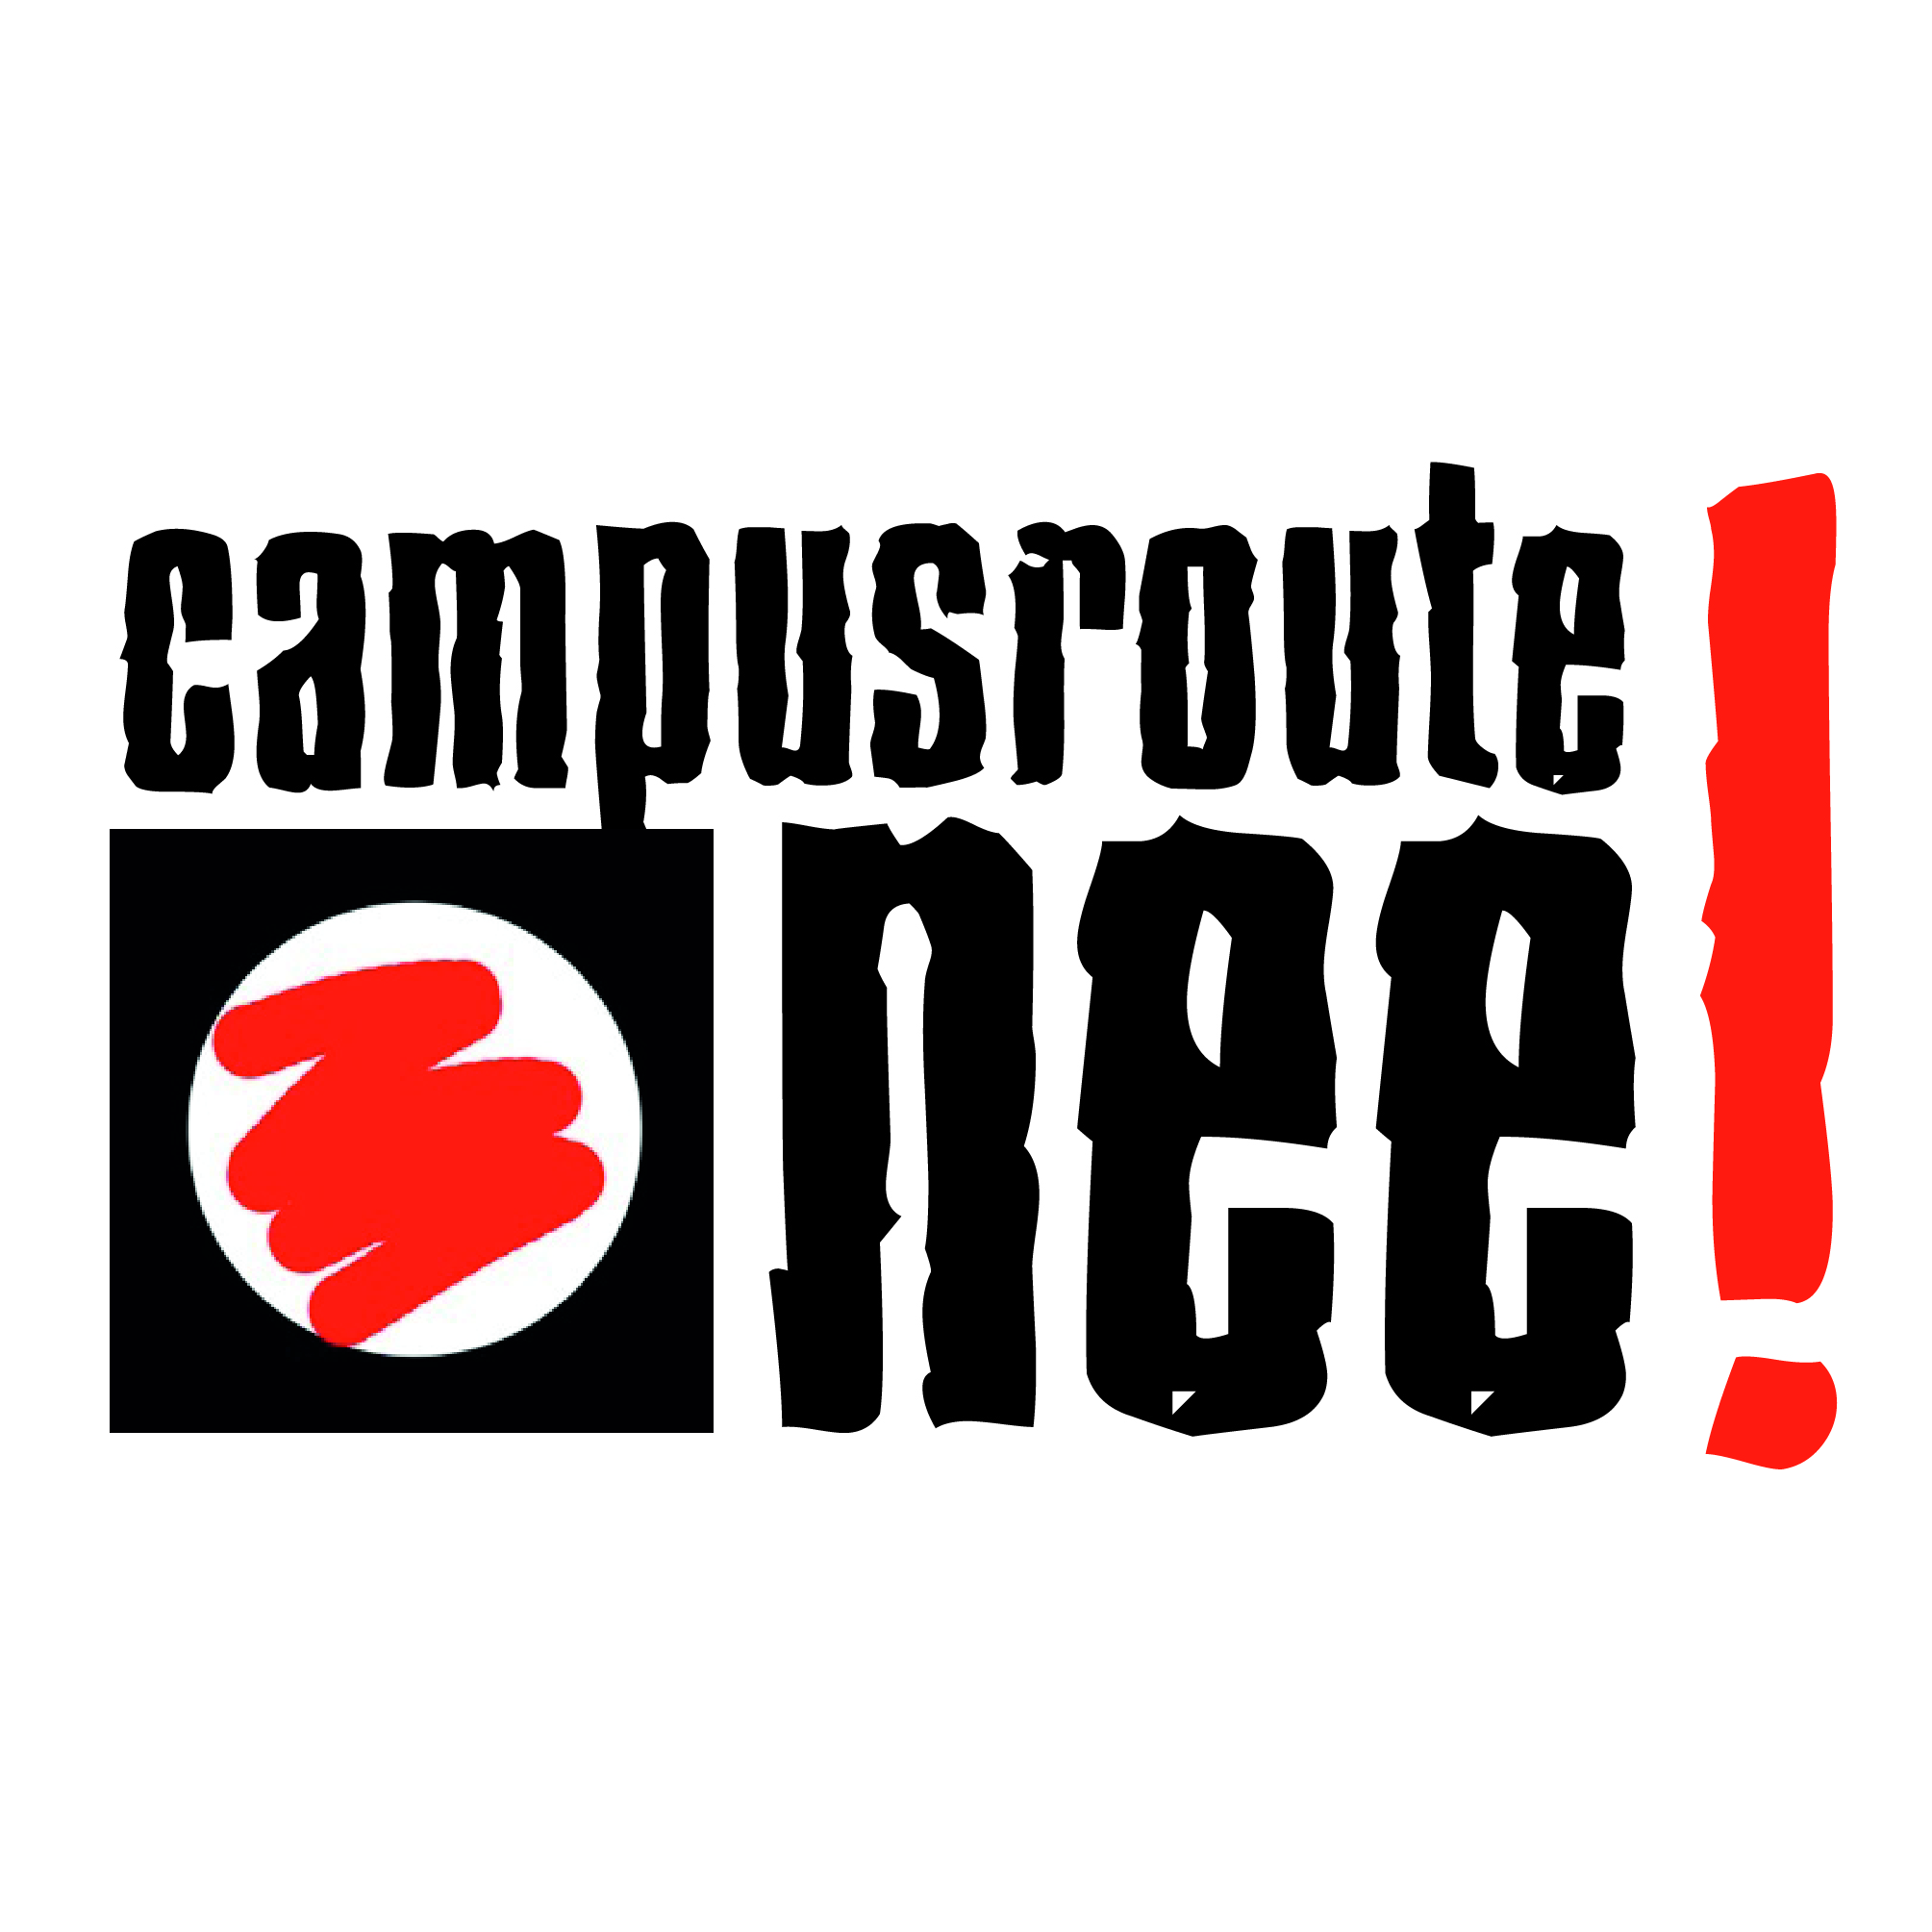 logo campusroutenee